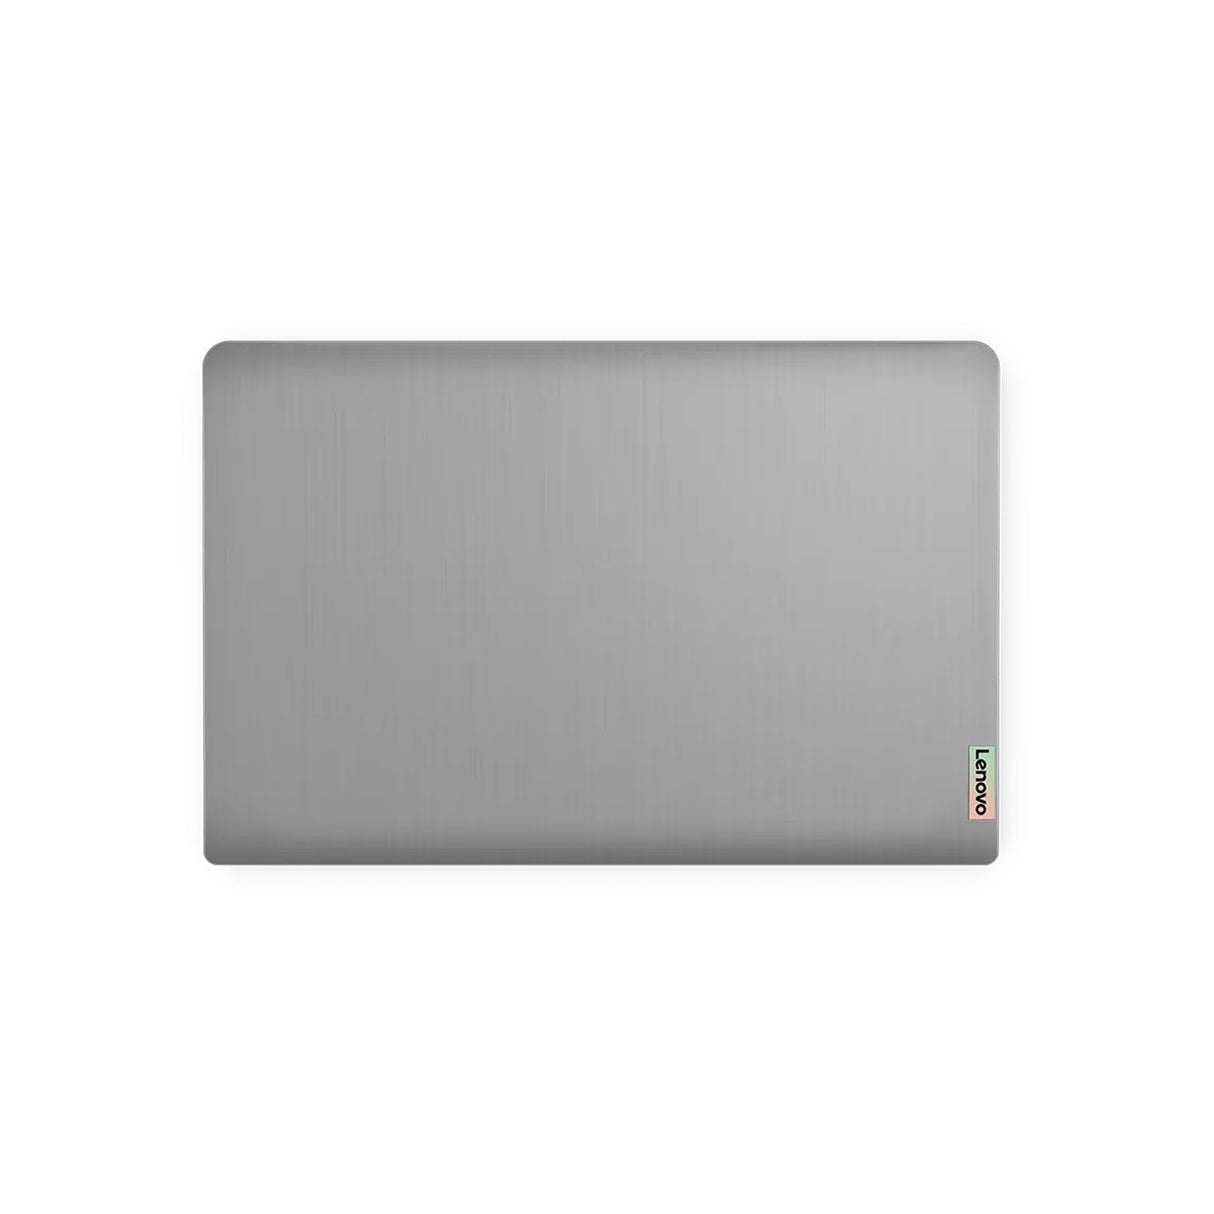 Lenovo Ideapad Slim 3i: 12th Gen i3, 39.62cm, Arctic Grey - Best in its Class